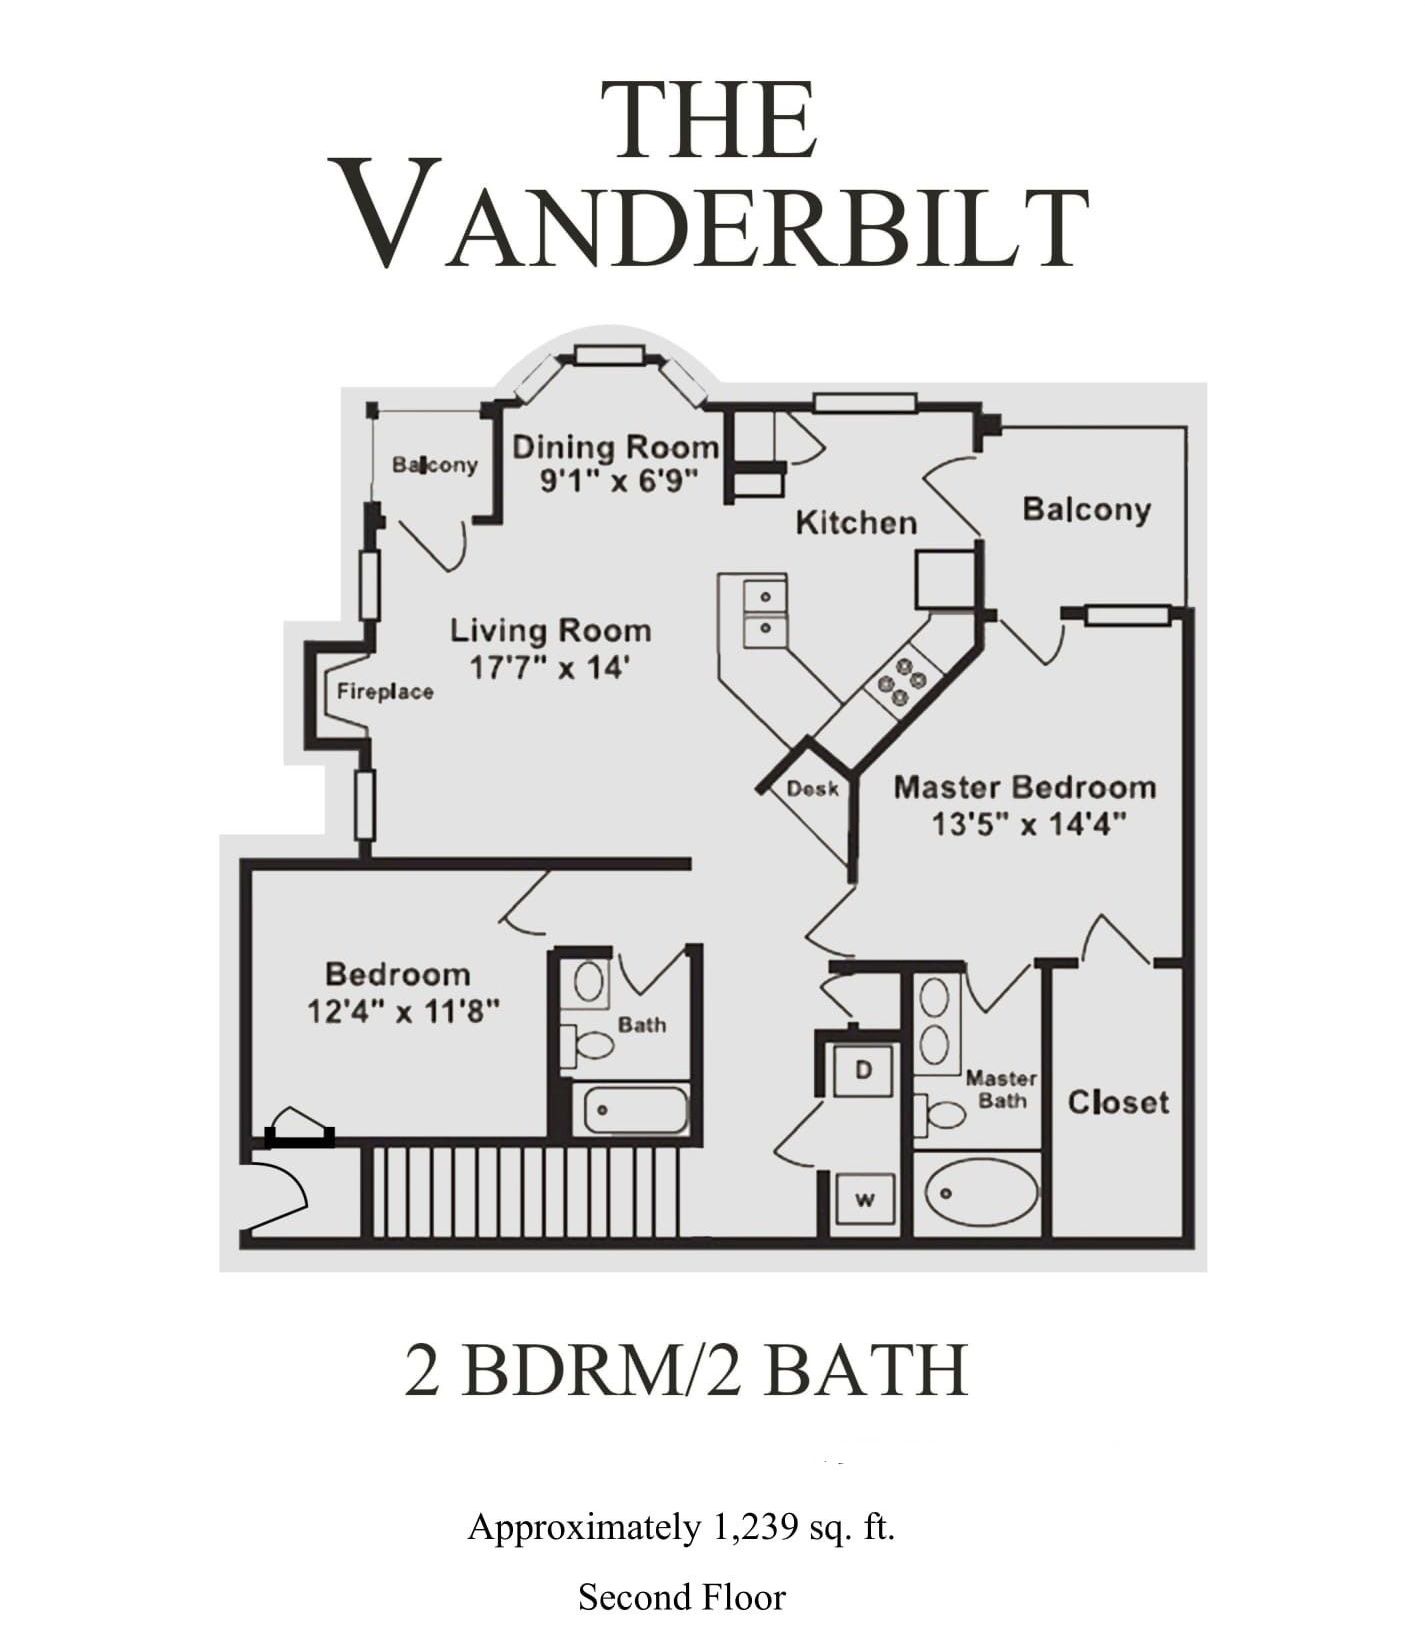 Vanderbilt floor plan drawing